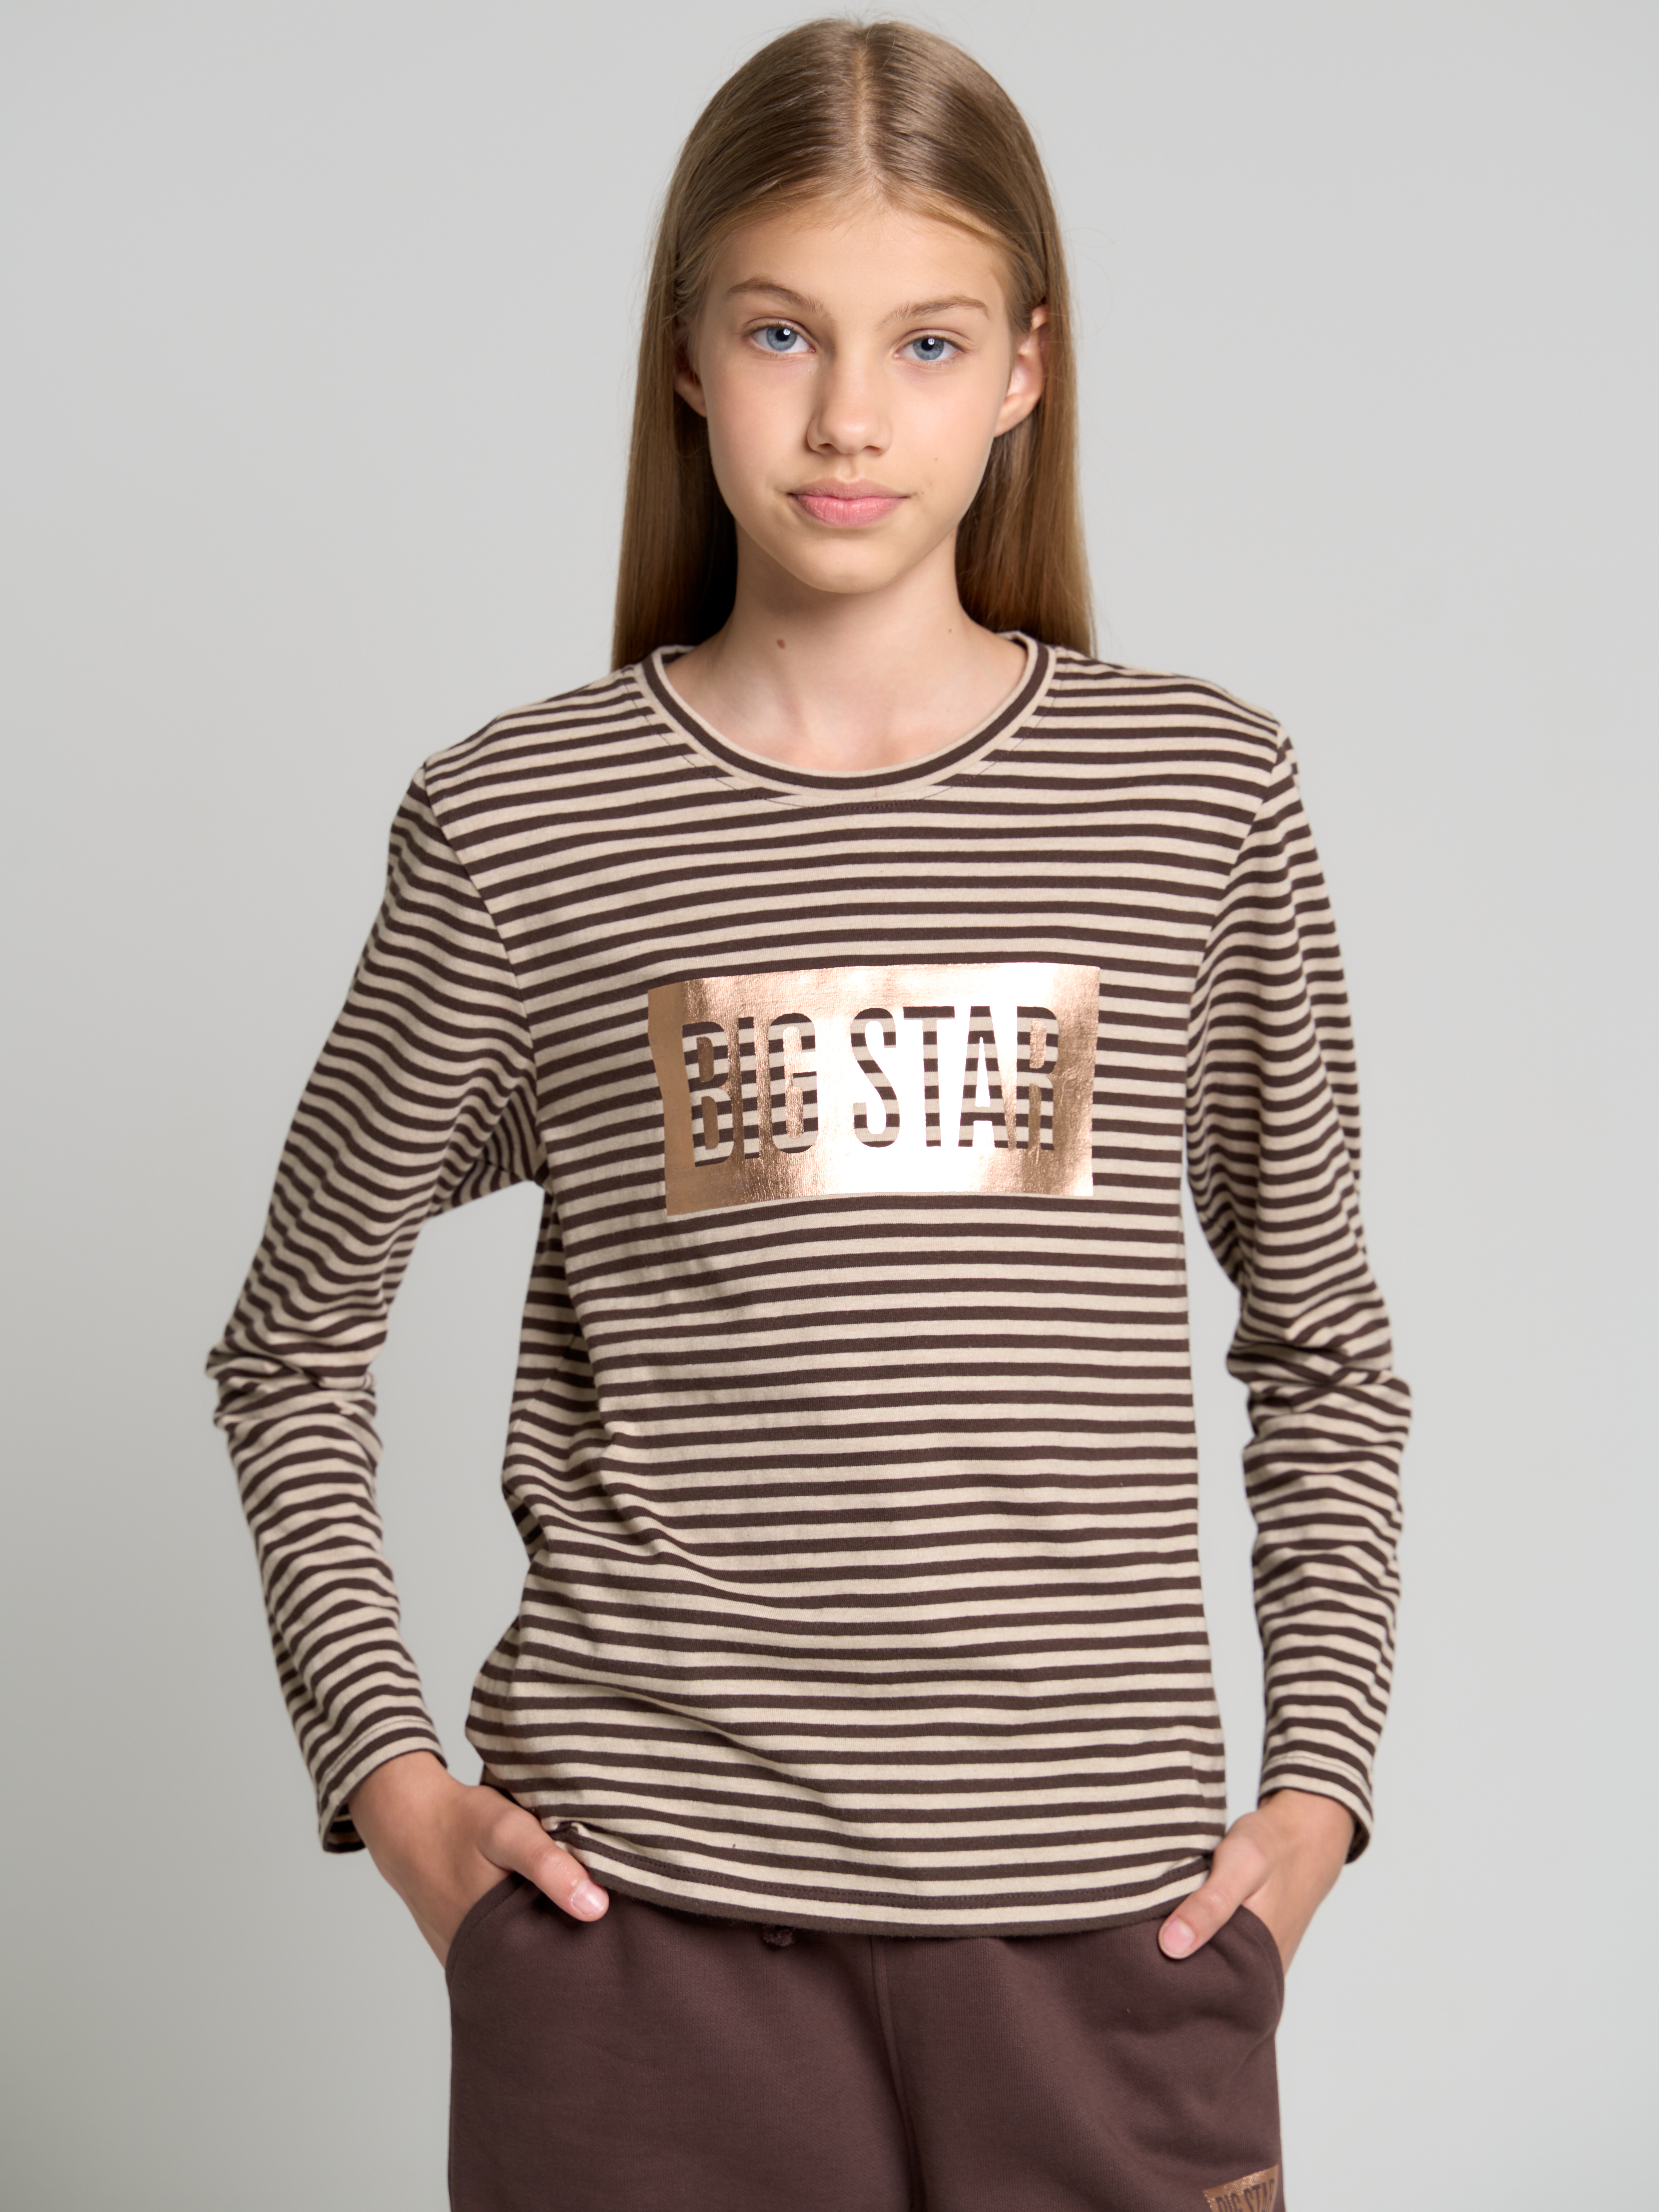 Big Star Kids′s T-shirt 180051-804 Dark Brown/Light Brown - hnedá